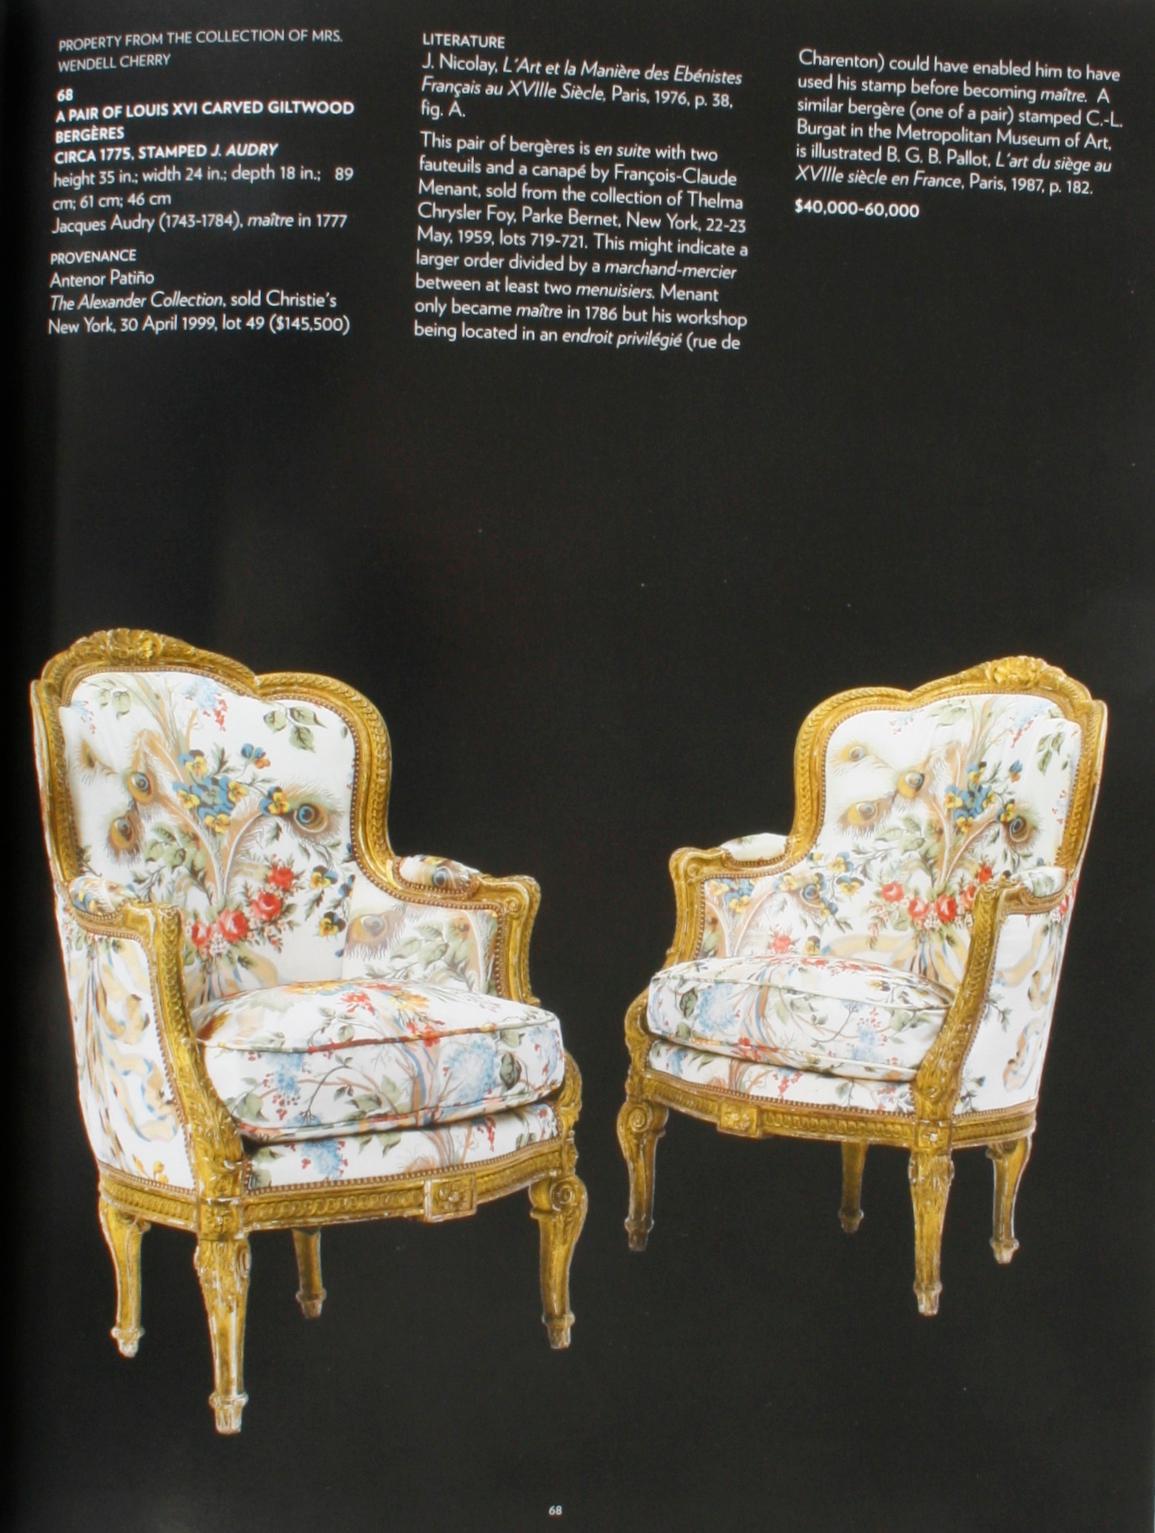 Important French Furniture, Ceramics & Carpets, the Estate of Mrs. Robert Lehman 3